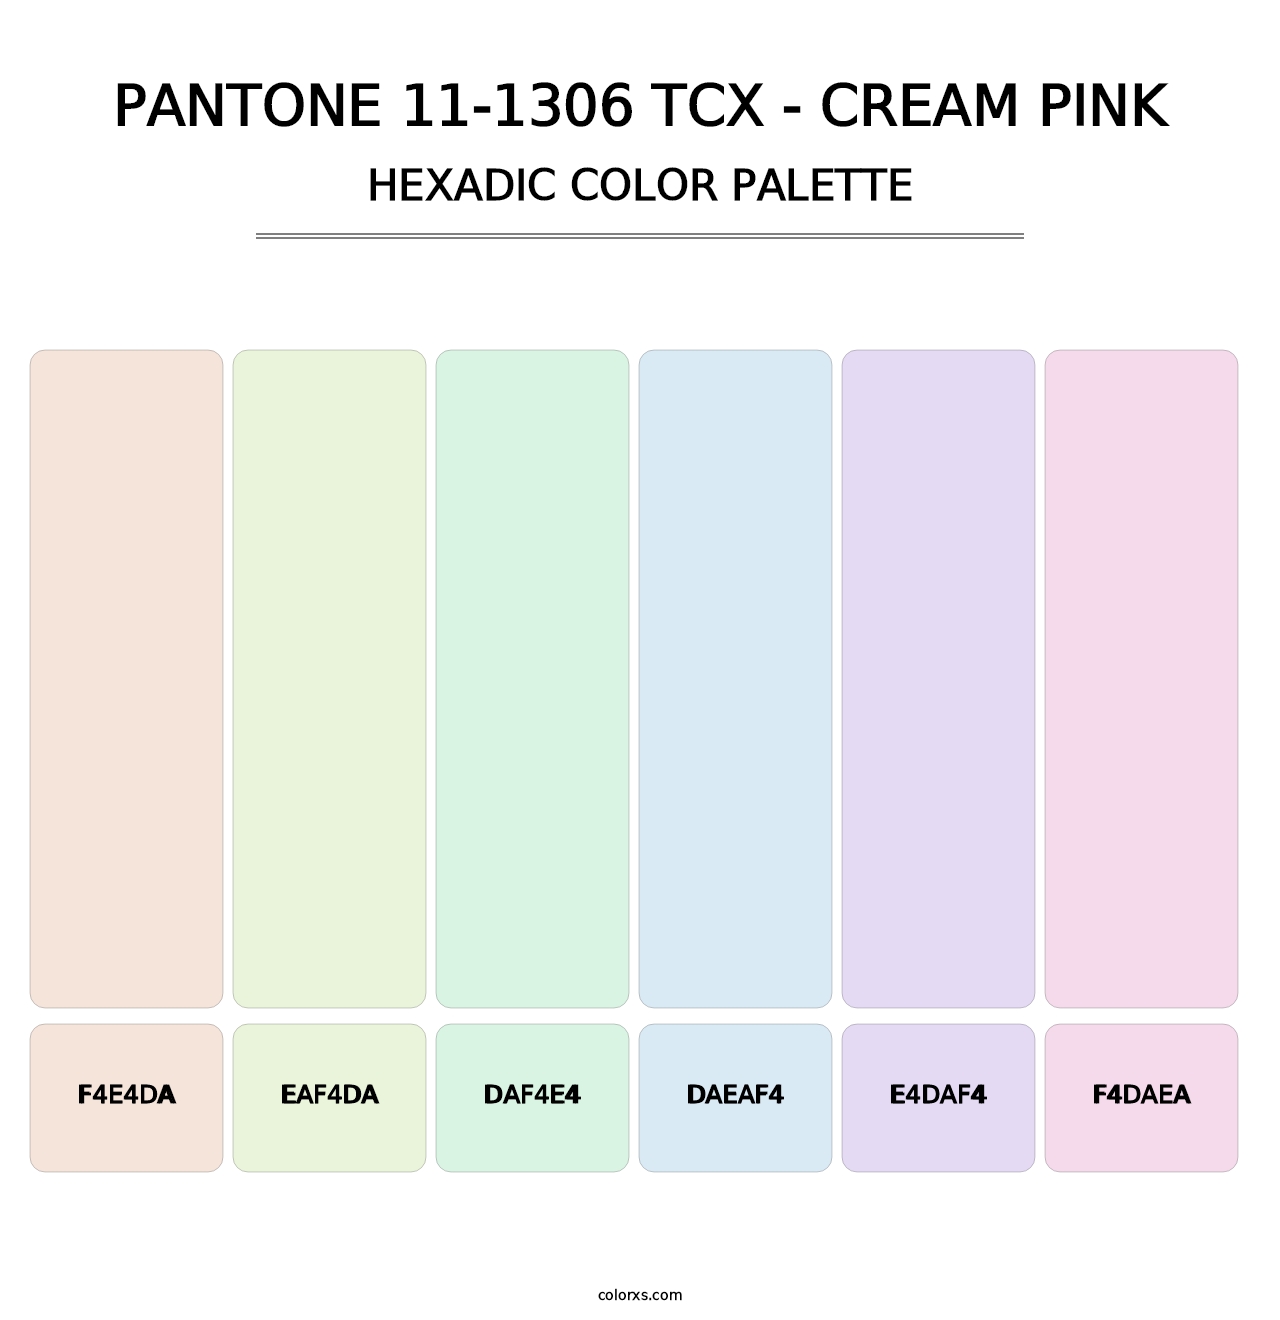 PANTONE 11-1306 TCX - Cream Pink - Hexadic Color Palette